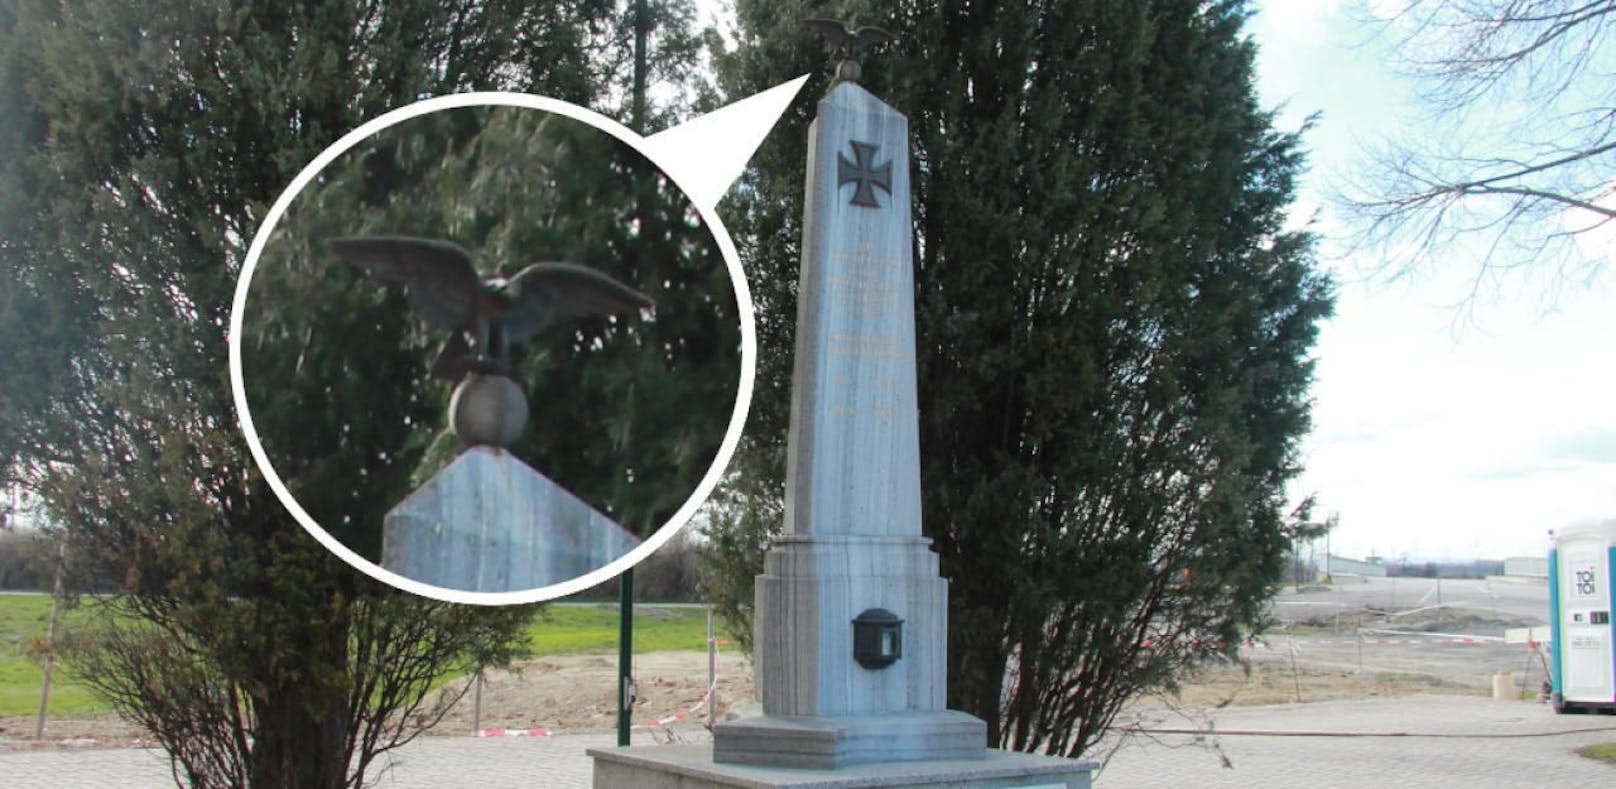 Adler von Kriegerdenkmal am Friedhof gestohlen